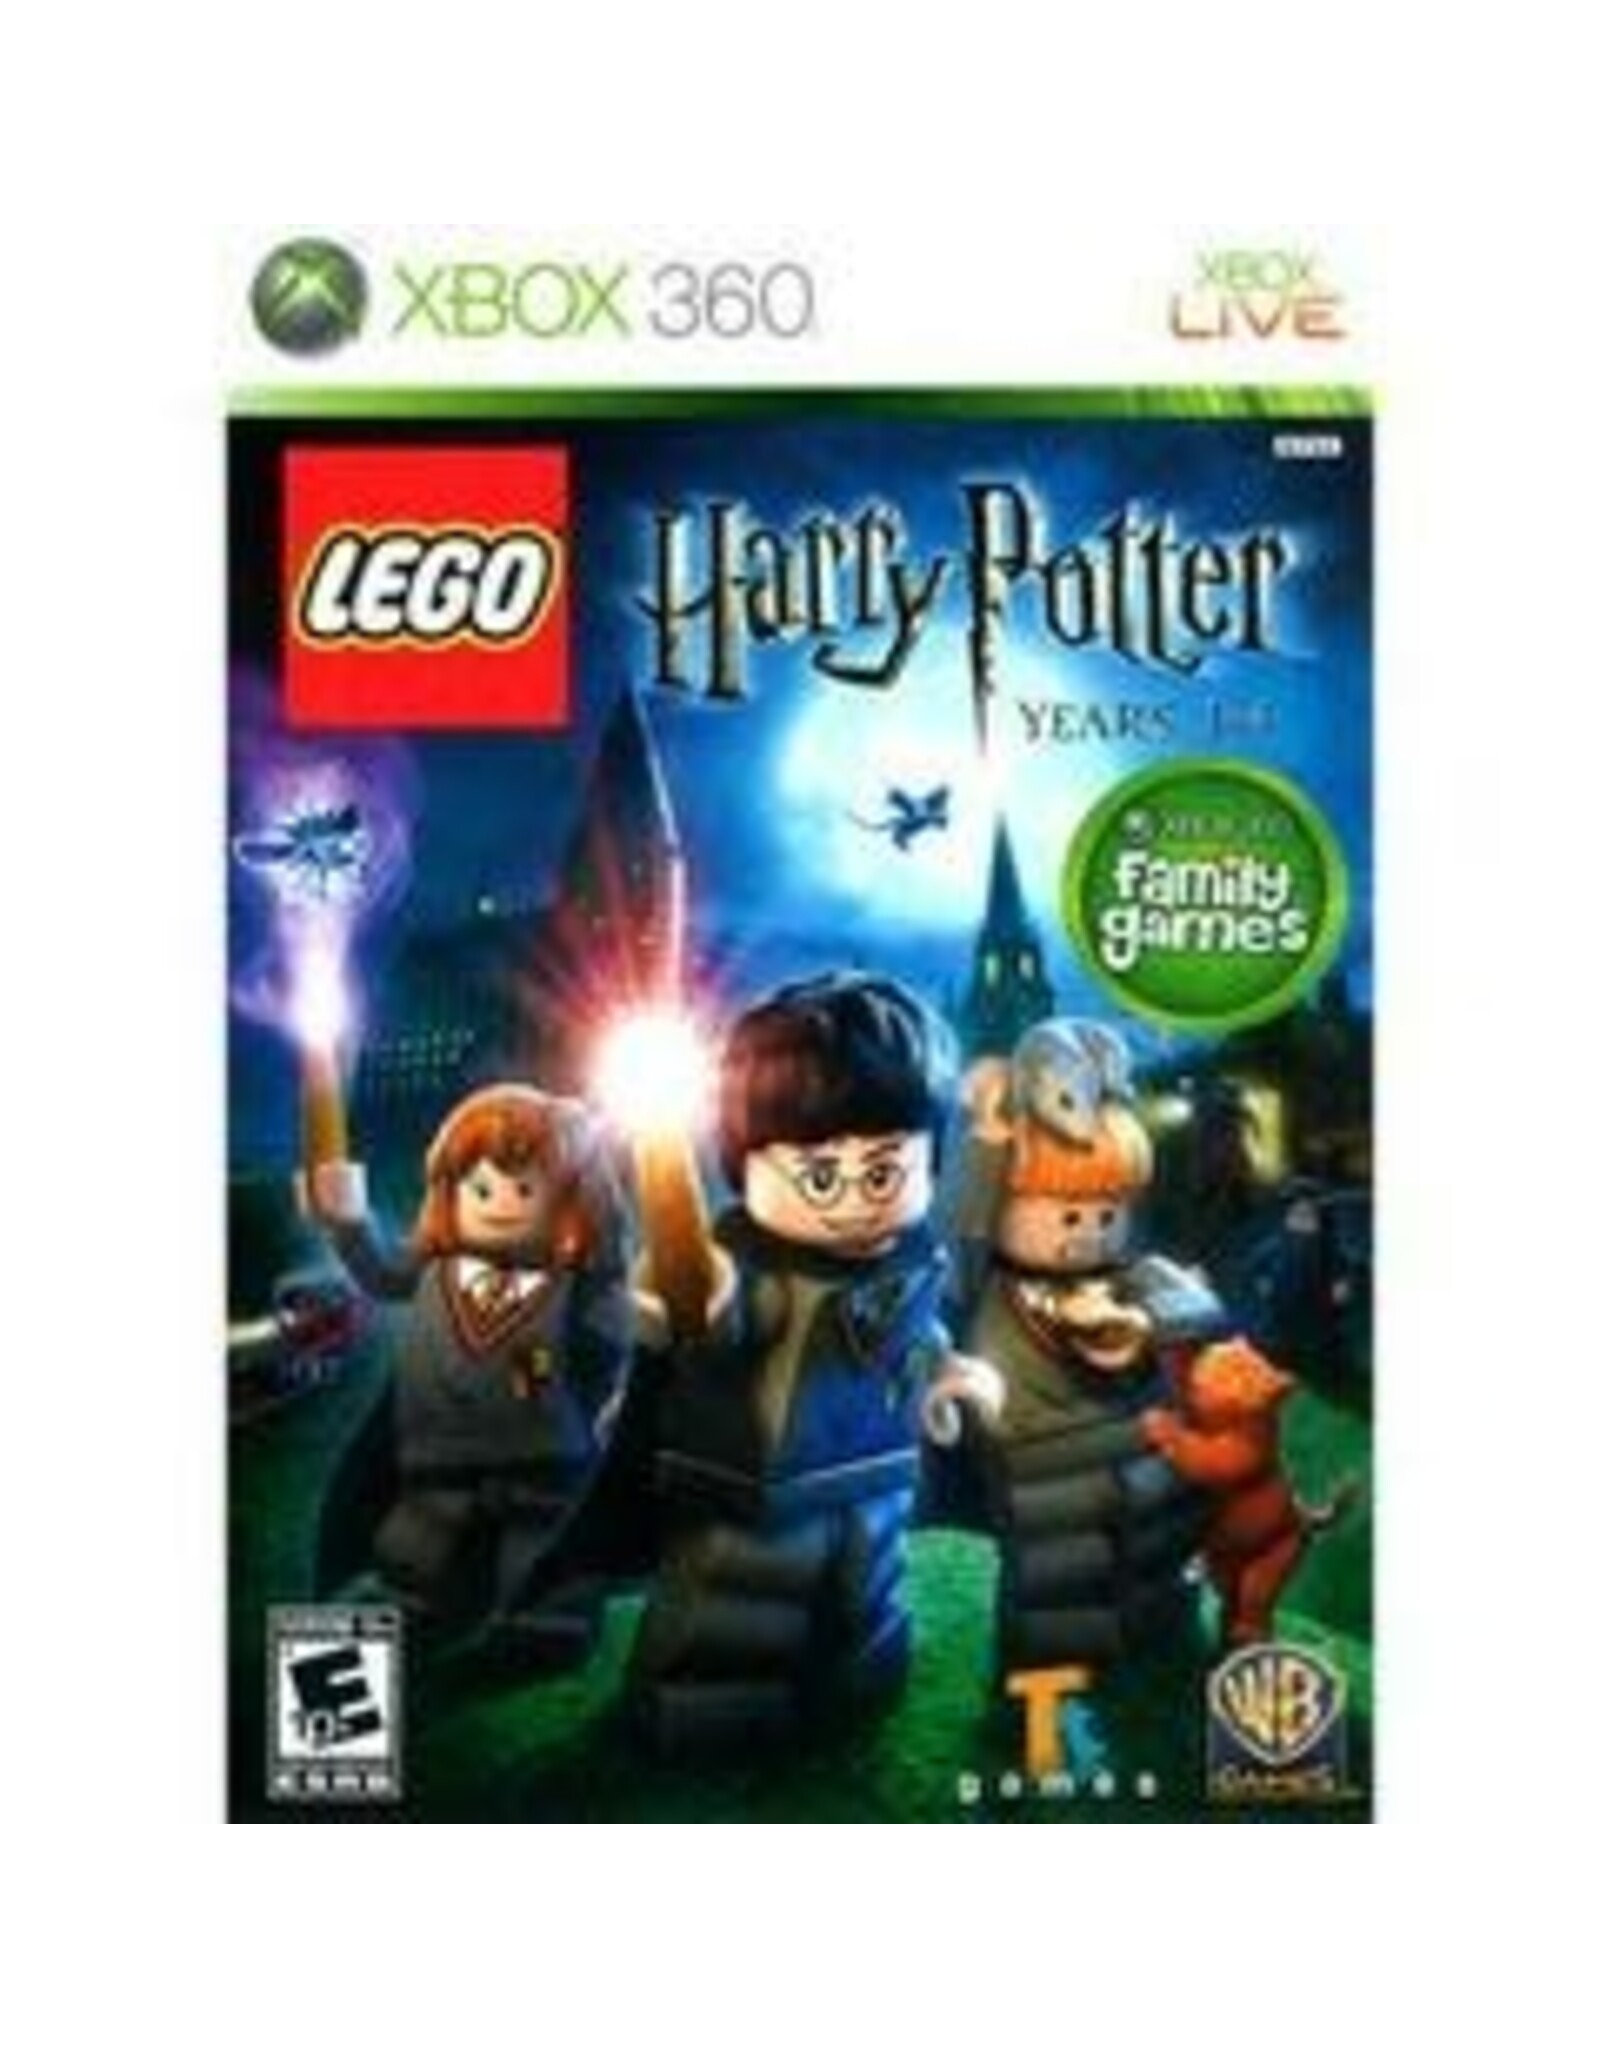 Xbox 360 LEGO Harry Potter: Years 1-4 (Used)